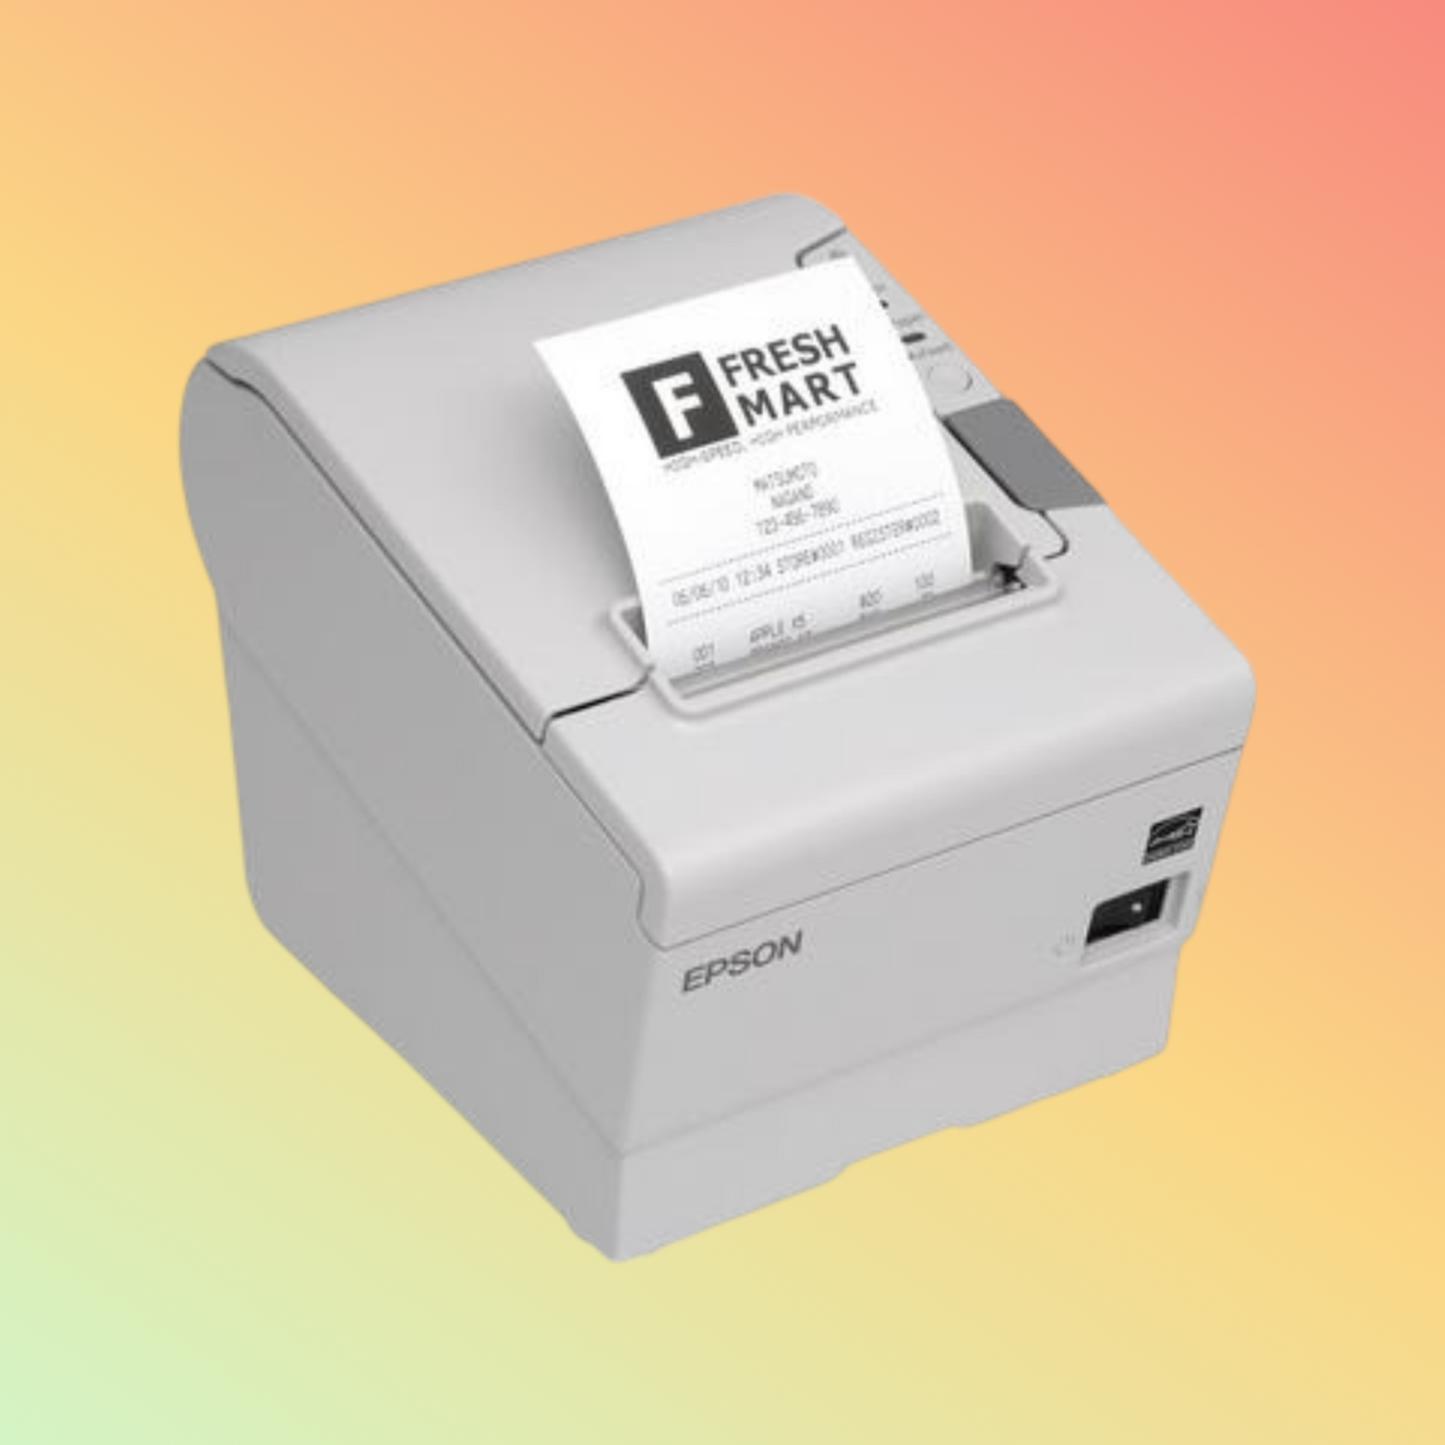 Epson TM T88IV Serial Interface Receipt Printers